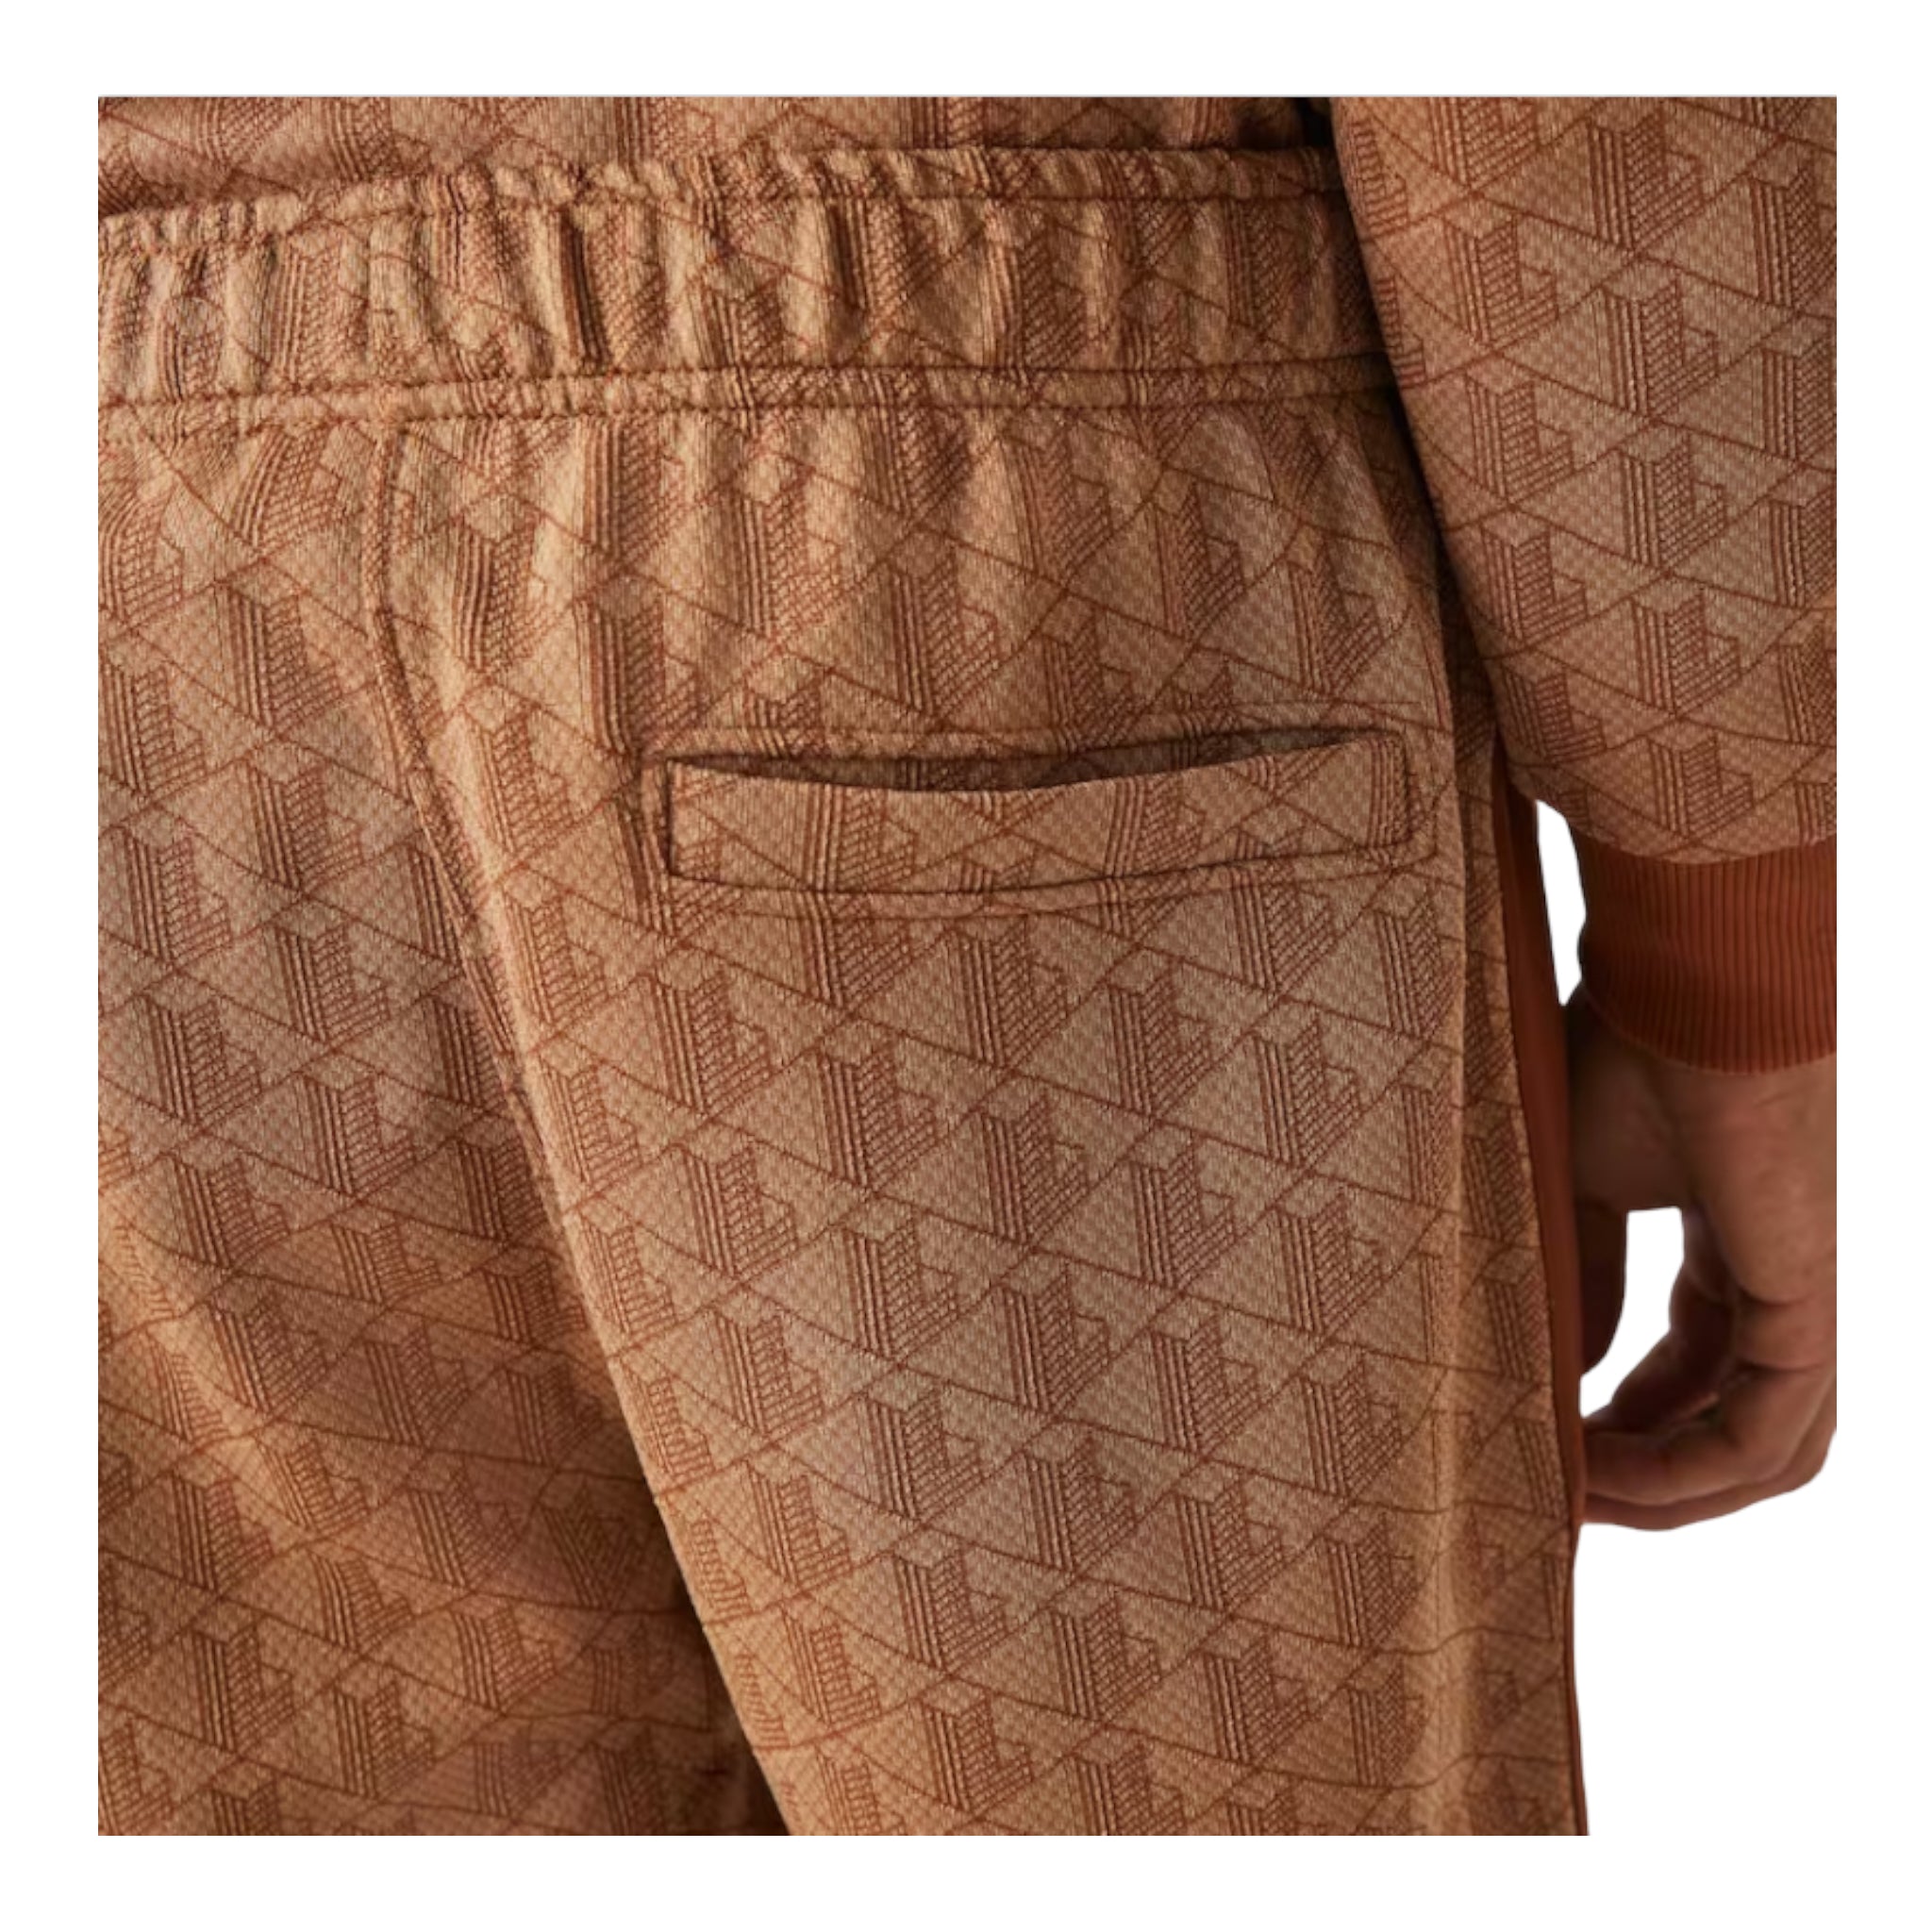 Lacoste Men's Monogram Print Track Pants XL / Beige/Brown